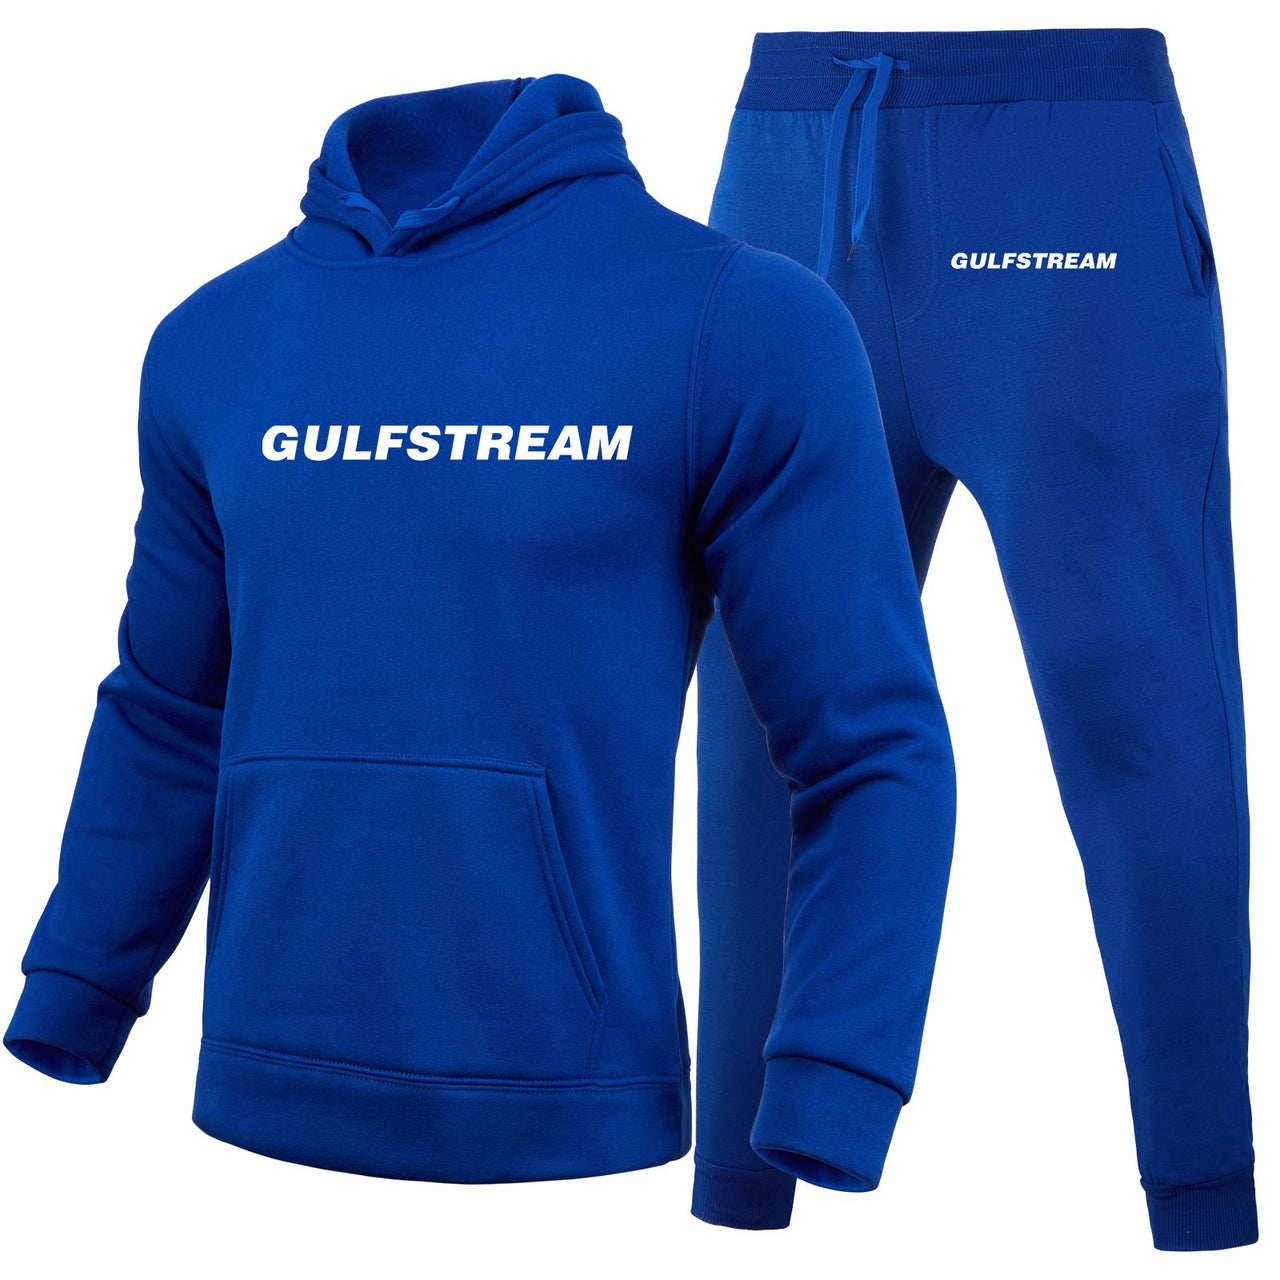 Gulfstream & Text Designed Hoodies & Sweatpants Set